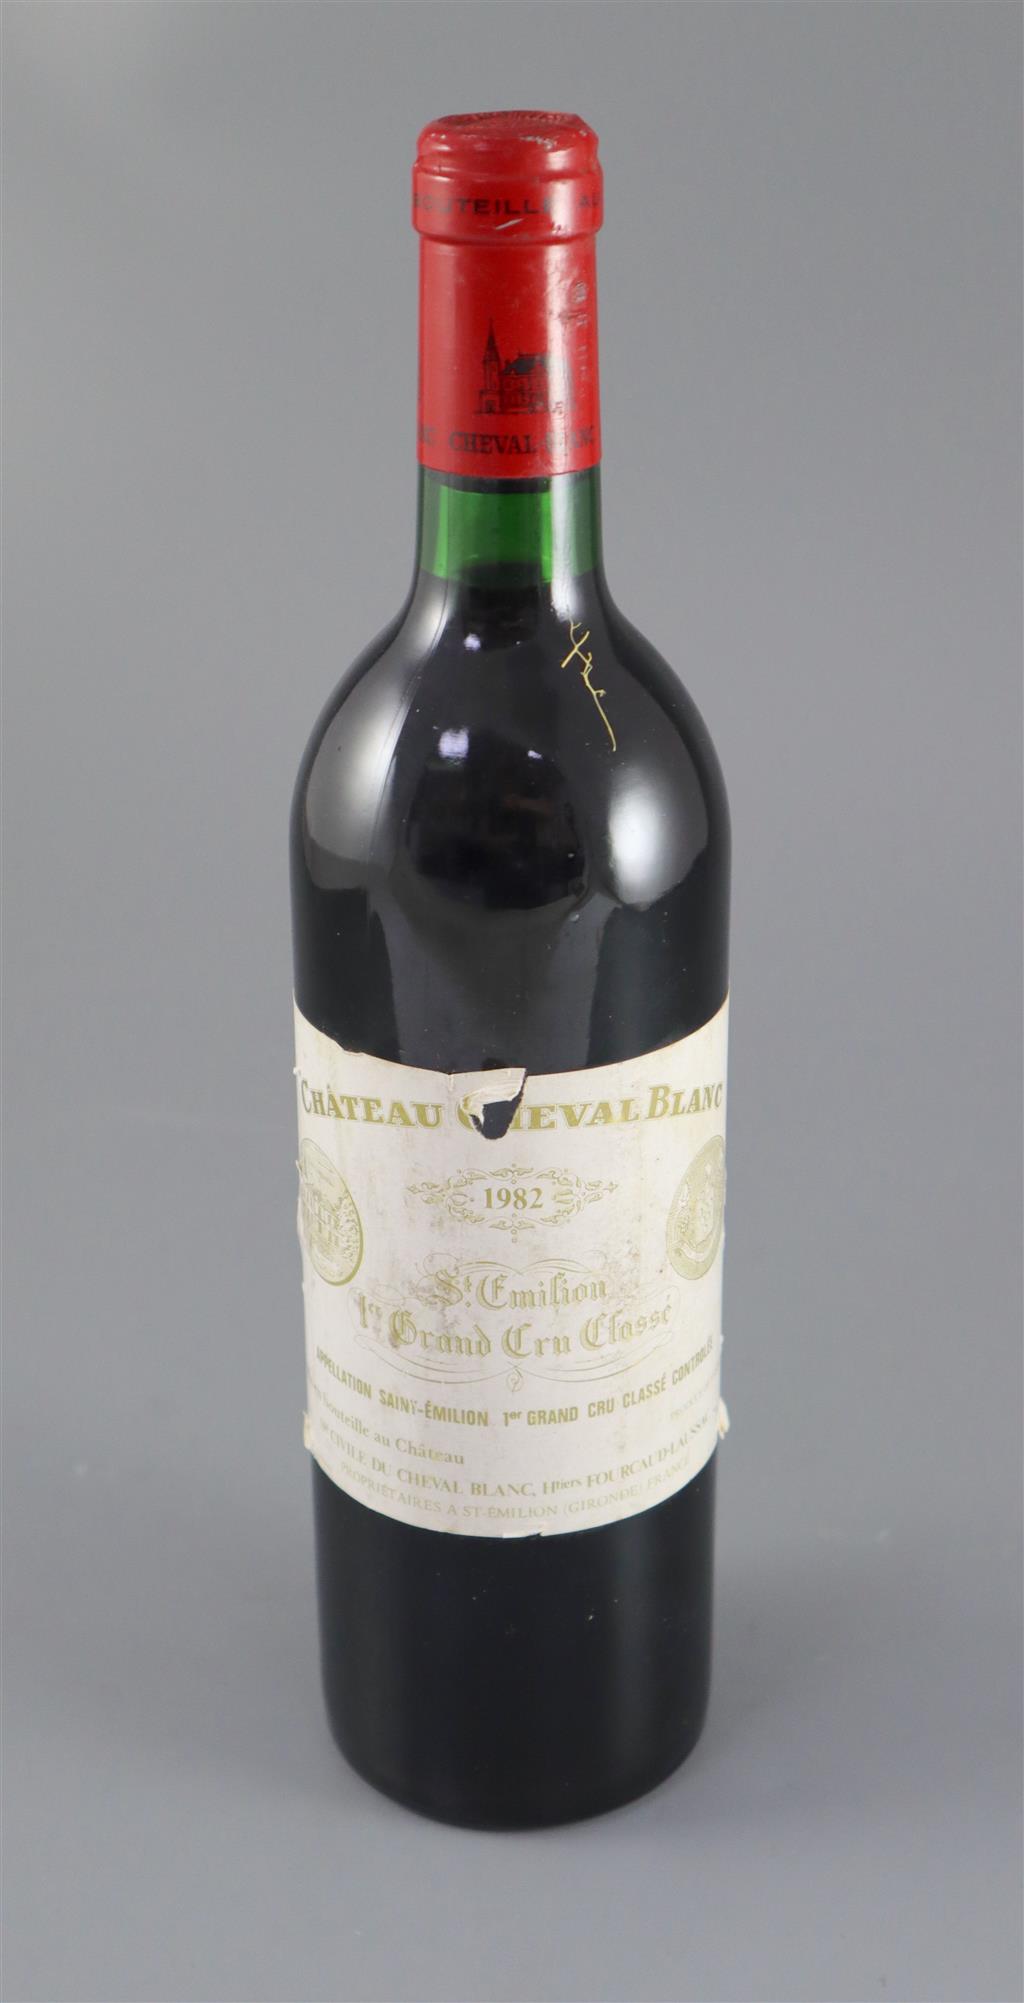 A bottle of Chateau Cheval Blanc St Emilion 1982